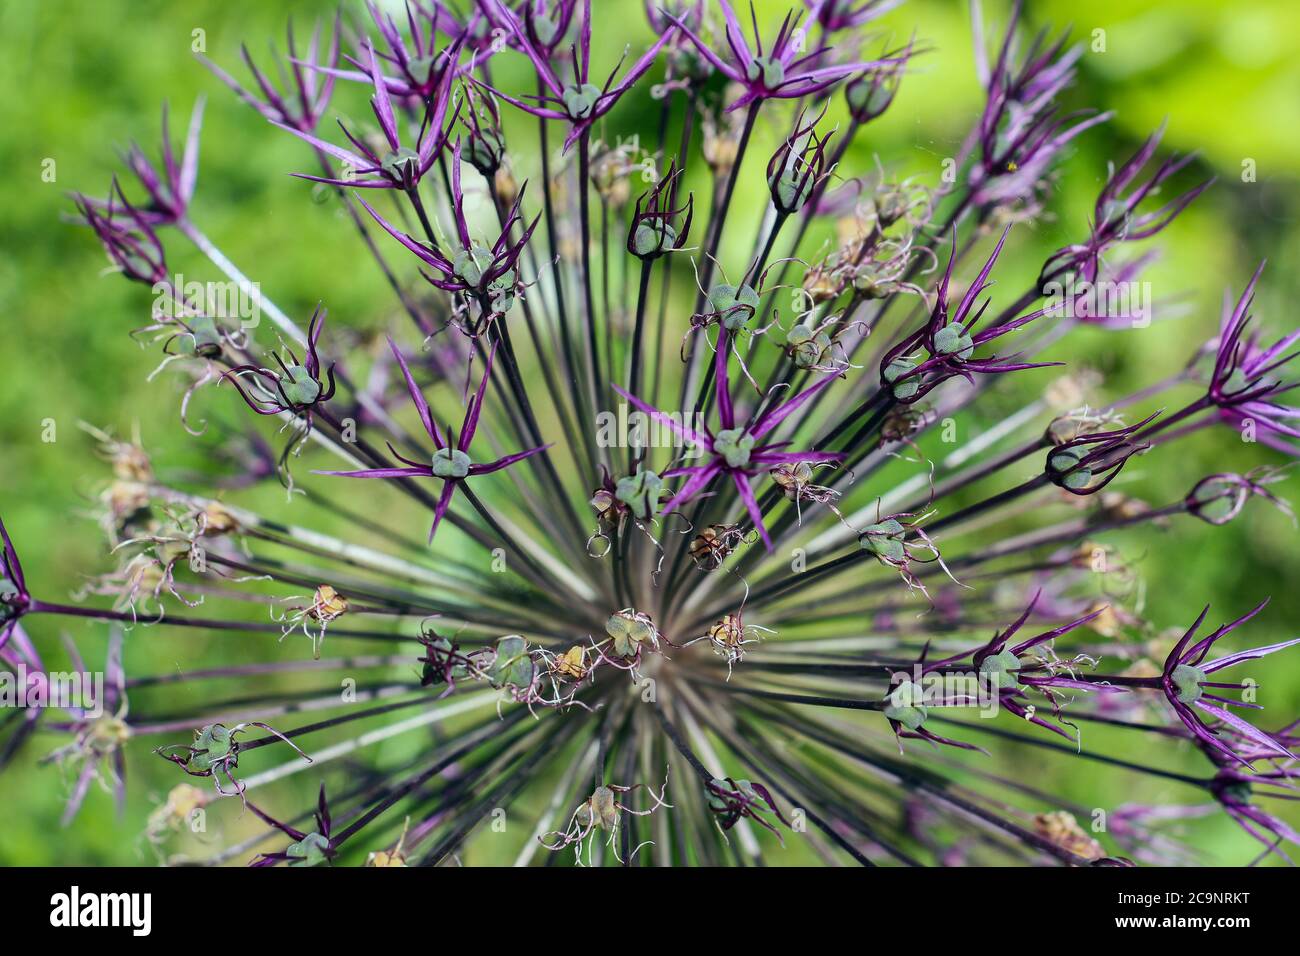 Beautiful ornamental flowering plant with star shaped purple flower - allium aflatunense Stock Photo